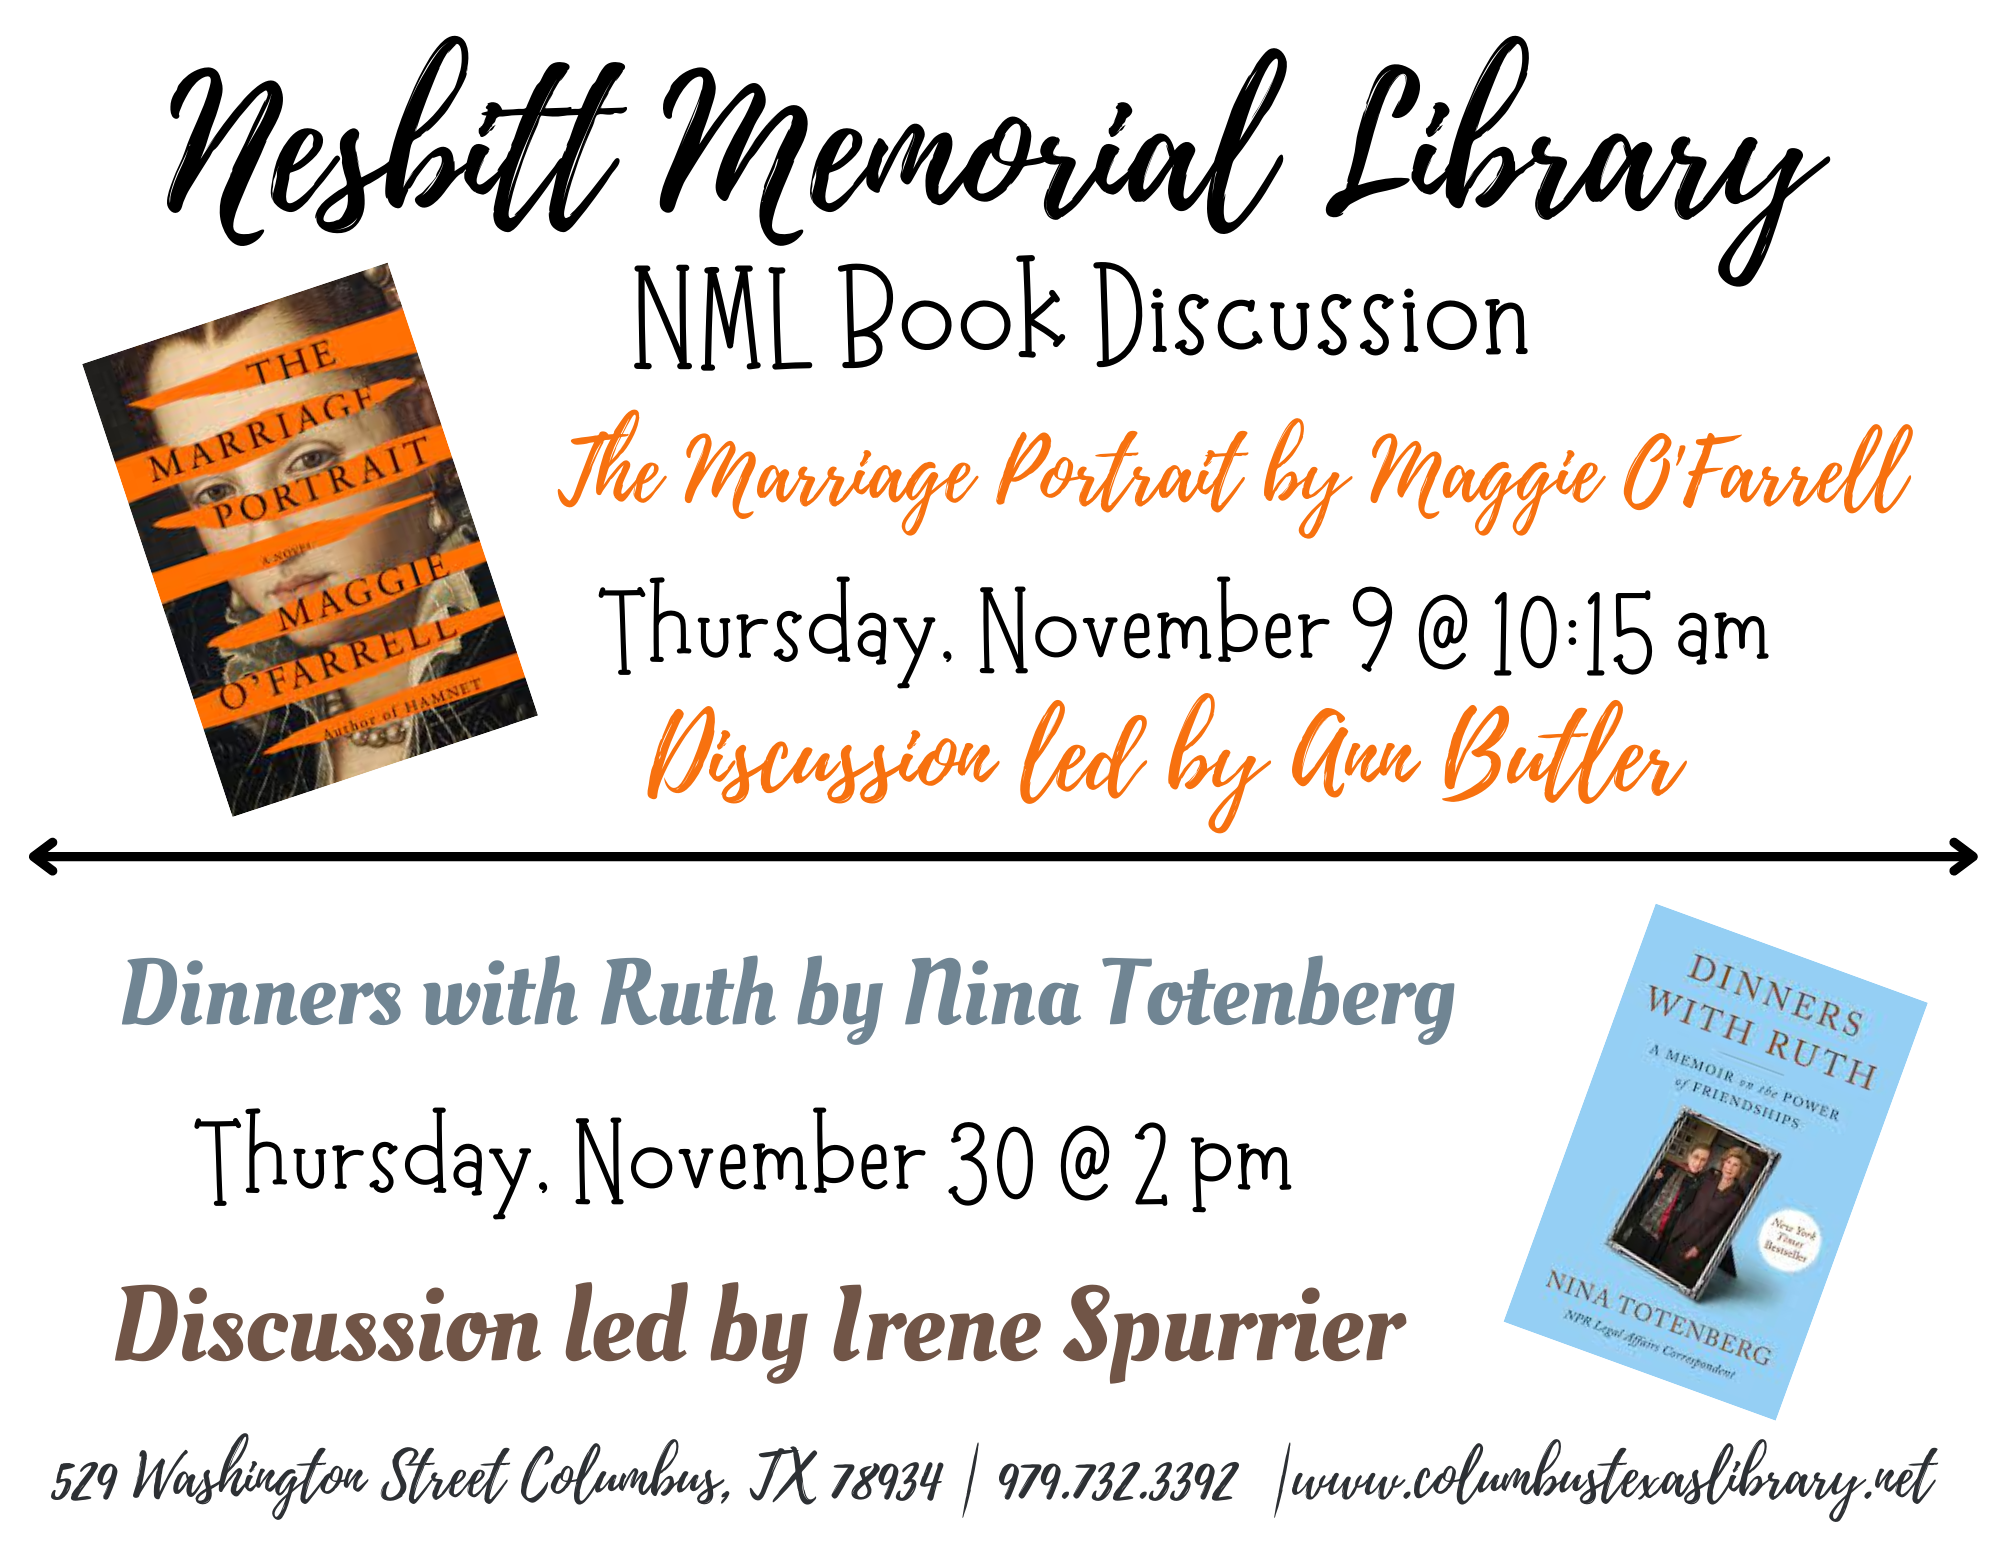  NML Book Discussions Nov 9th at 10:15am & Nov 30th at 2pm 